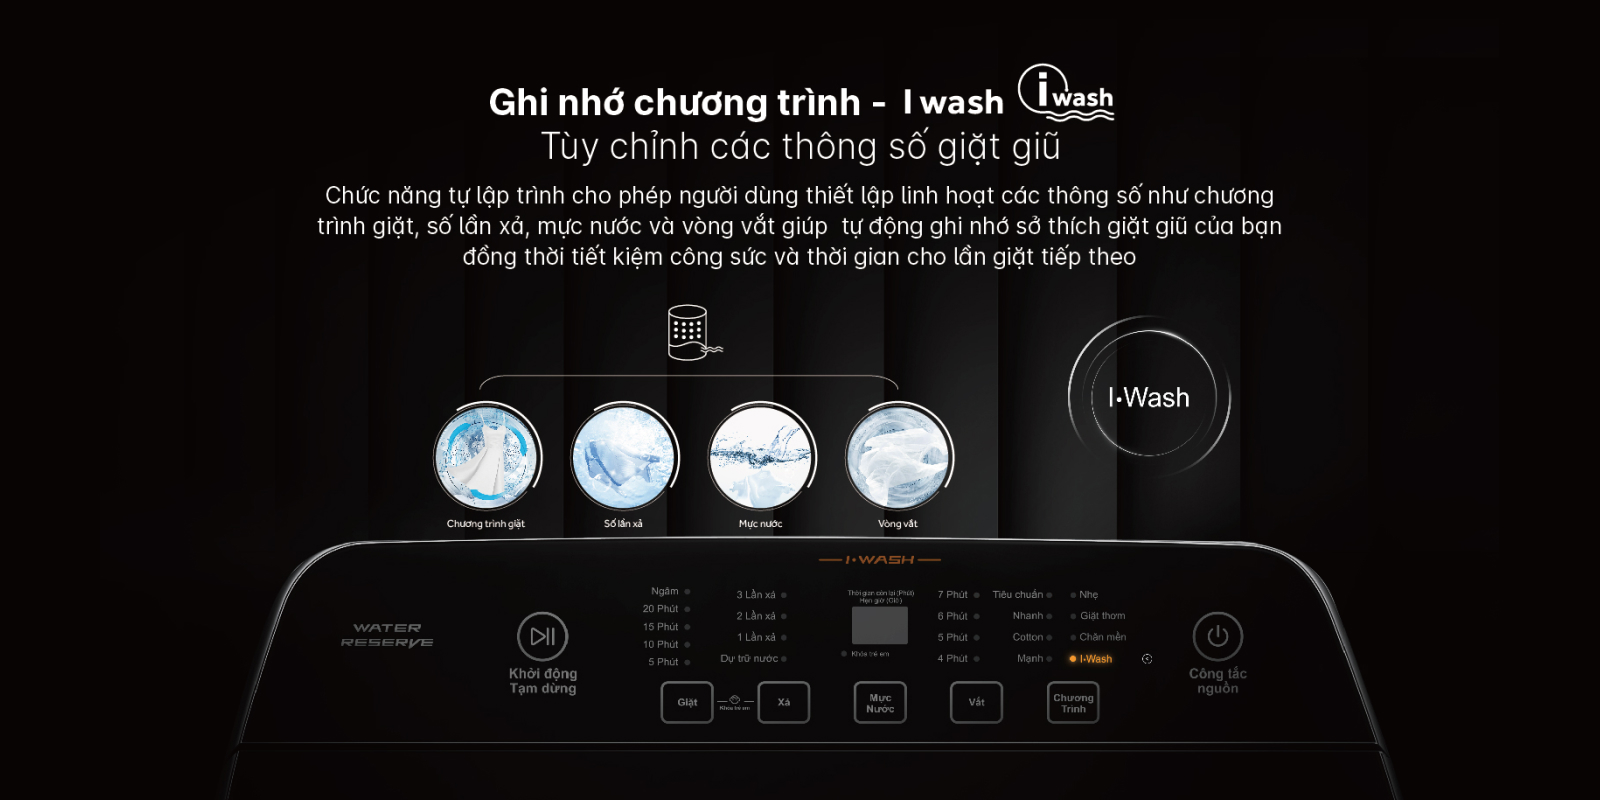 Ghi-nho-chuong-trinh-I-wash